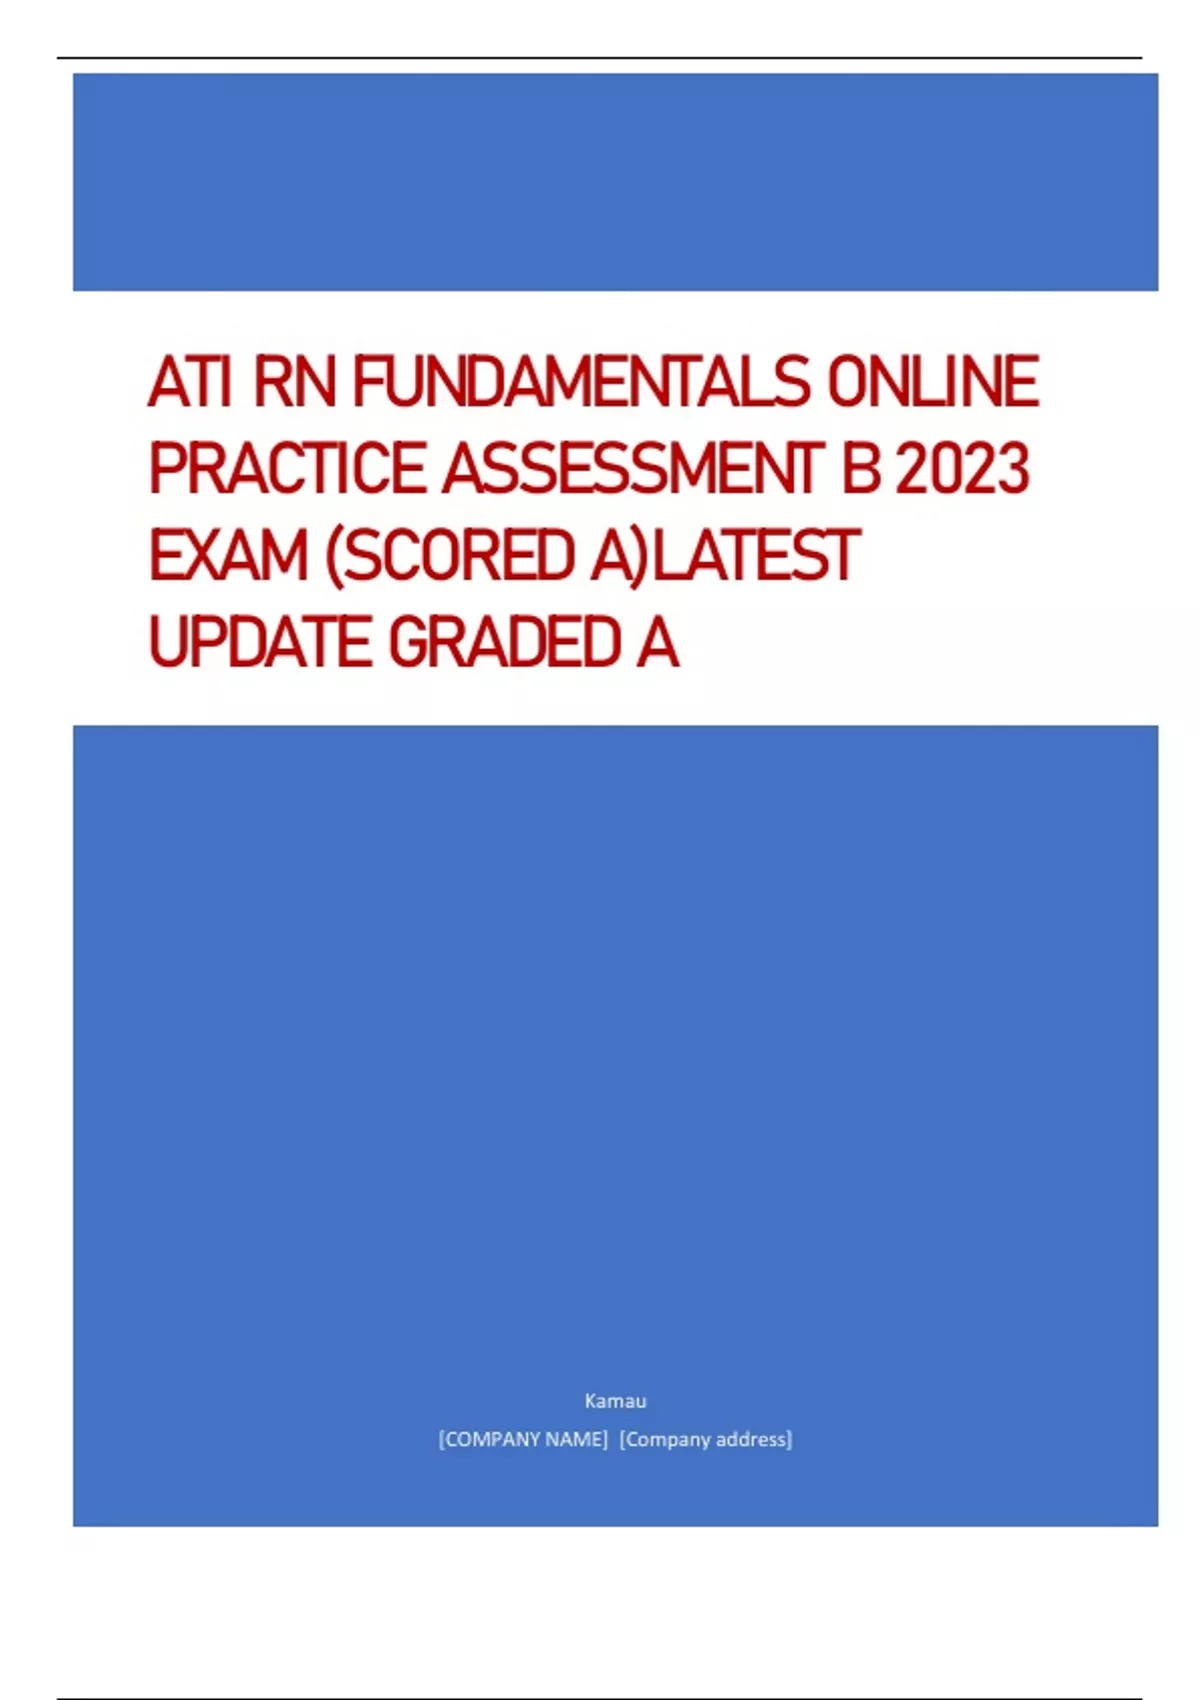 ATI RN FUNDAMENTALS ONLINE PRACTICE ASSESSMENT B 2023 EXAM (SCORED A